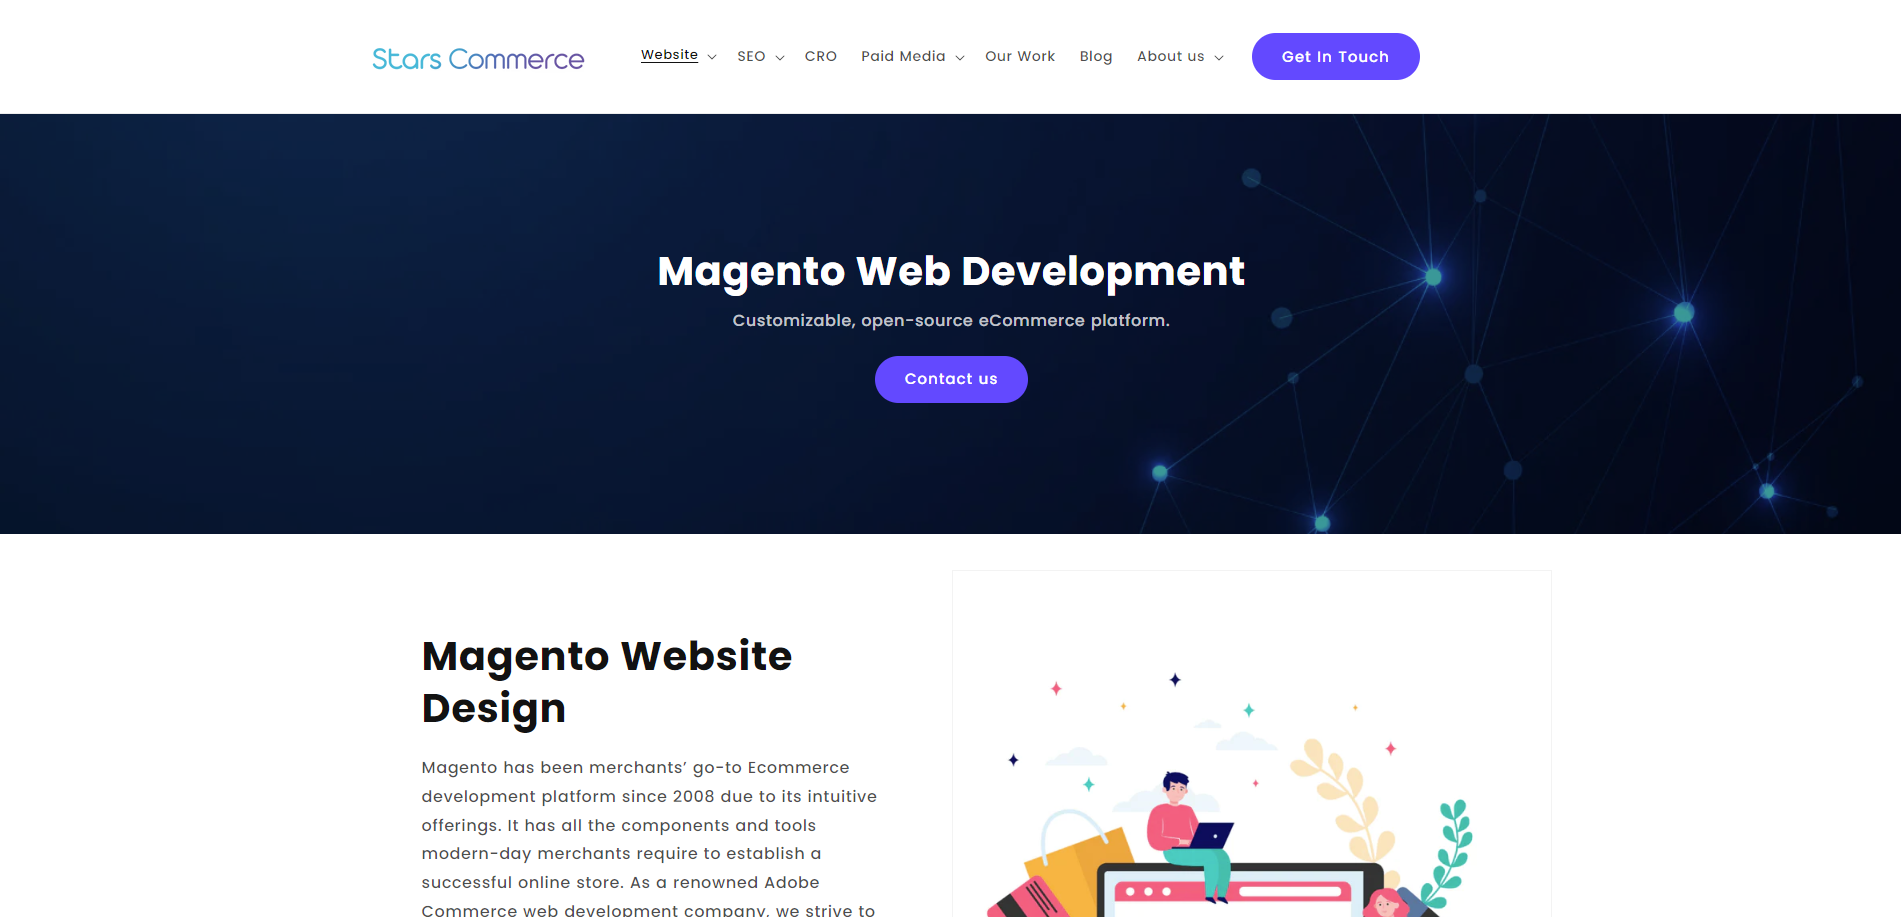 StarsCommerce Magento website development